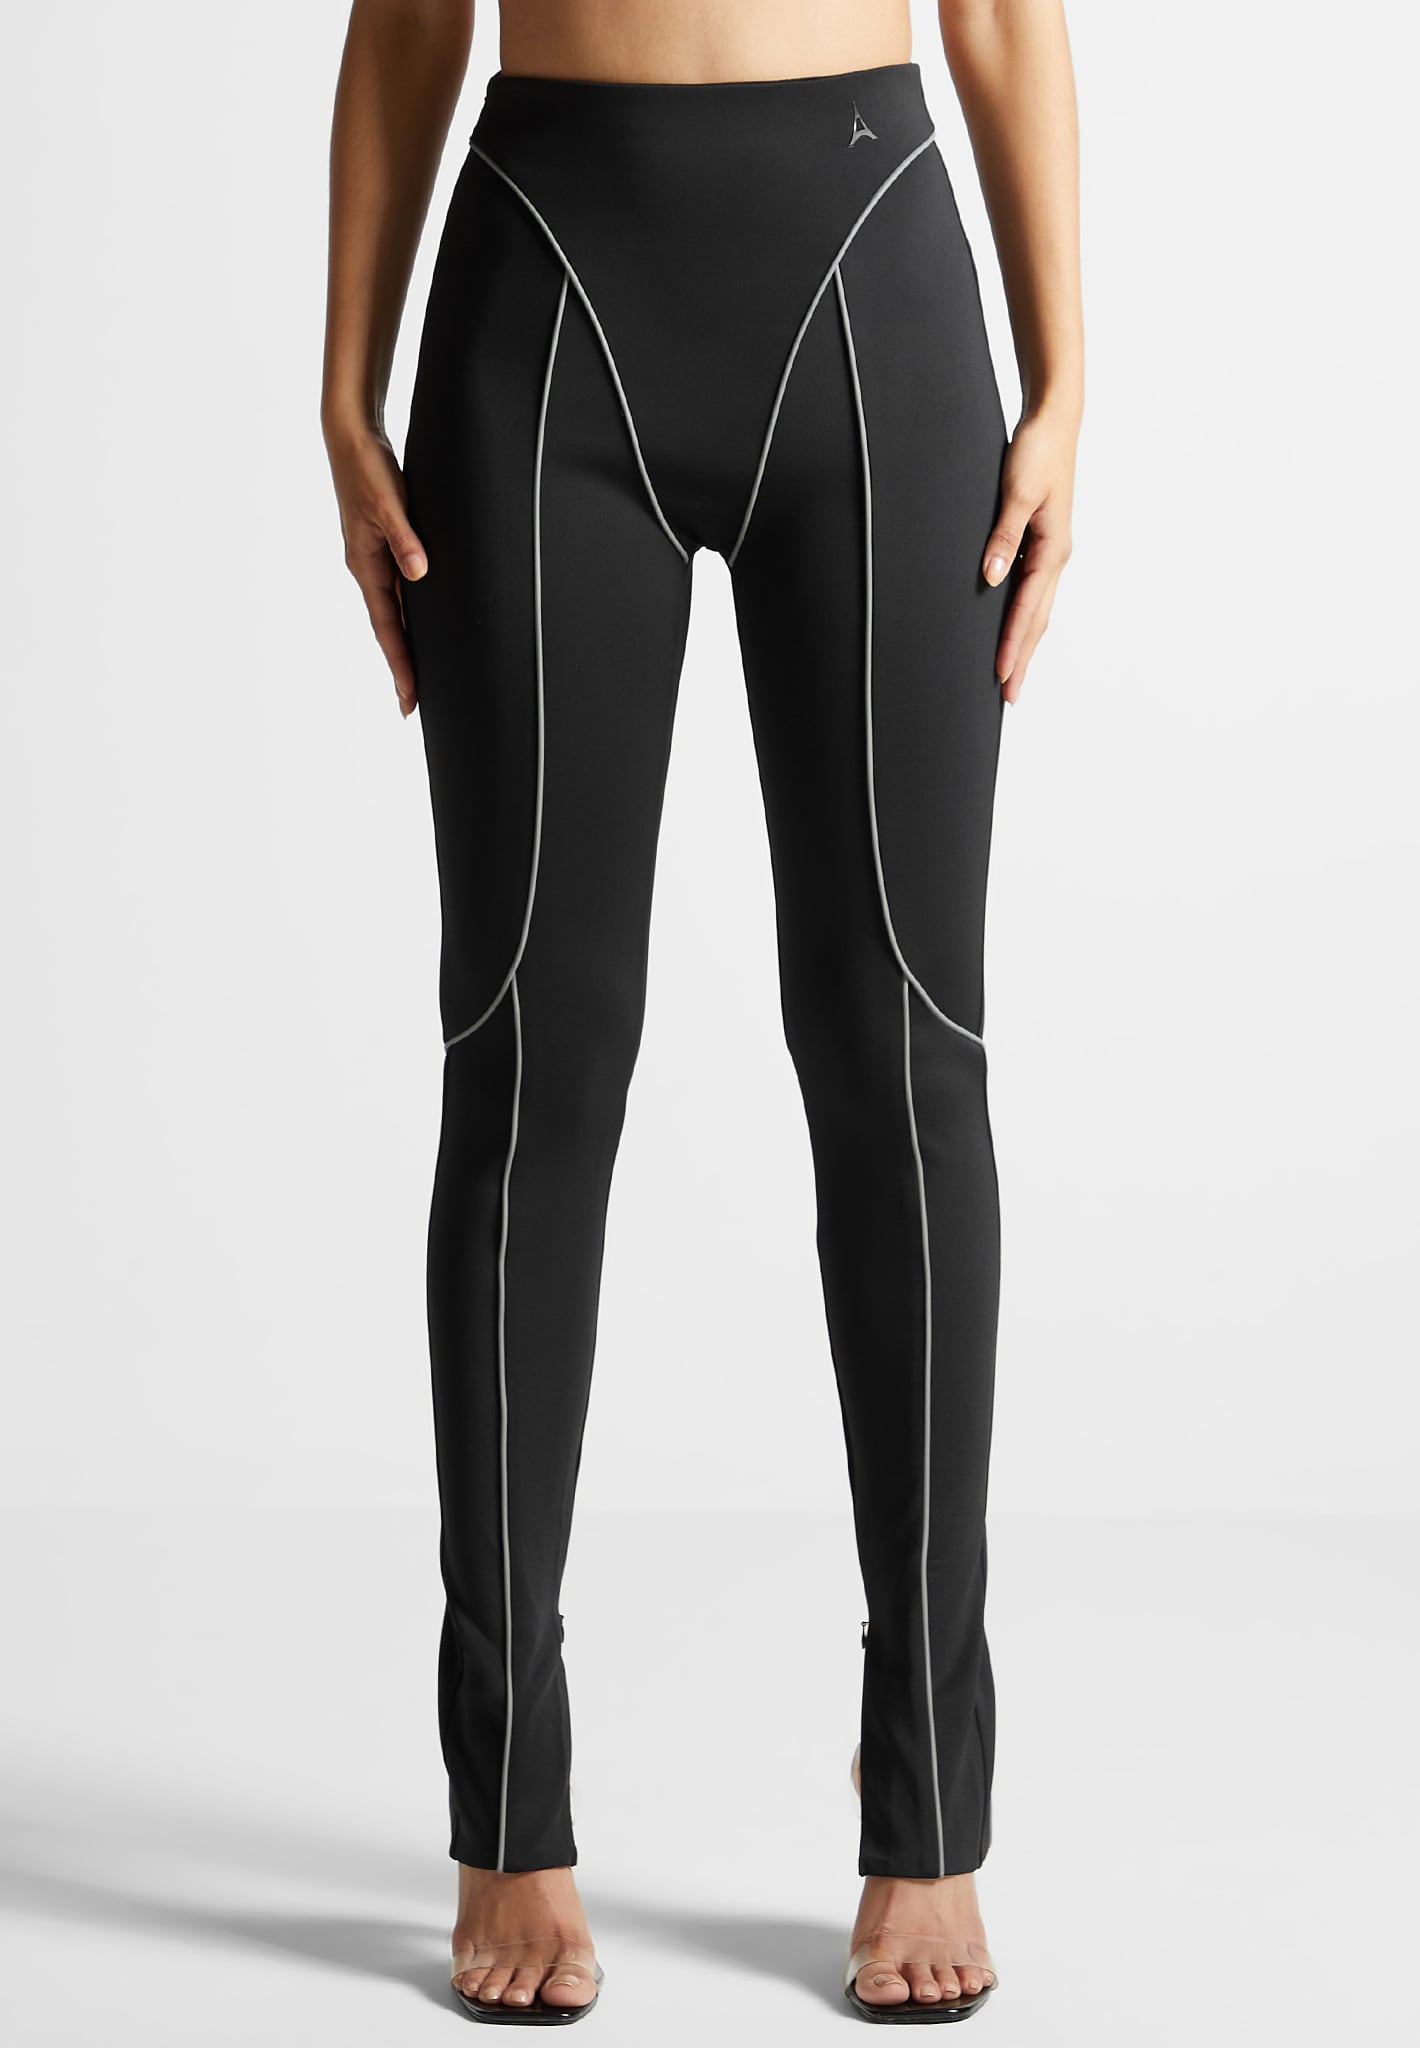 reflective-piped-leggings-black-1